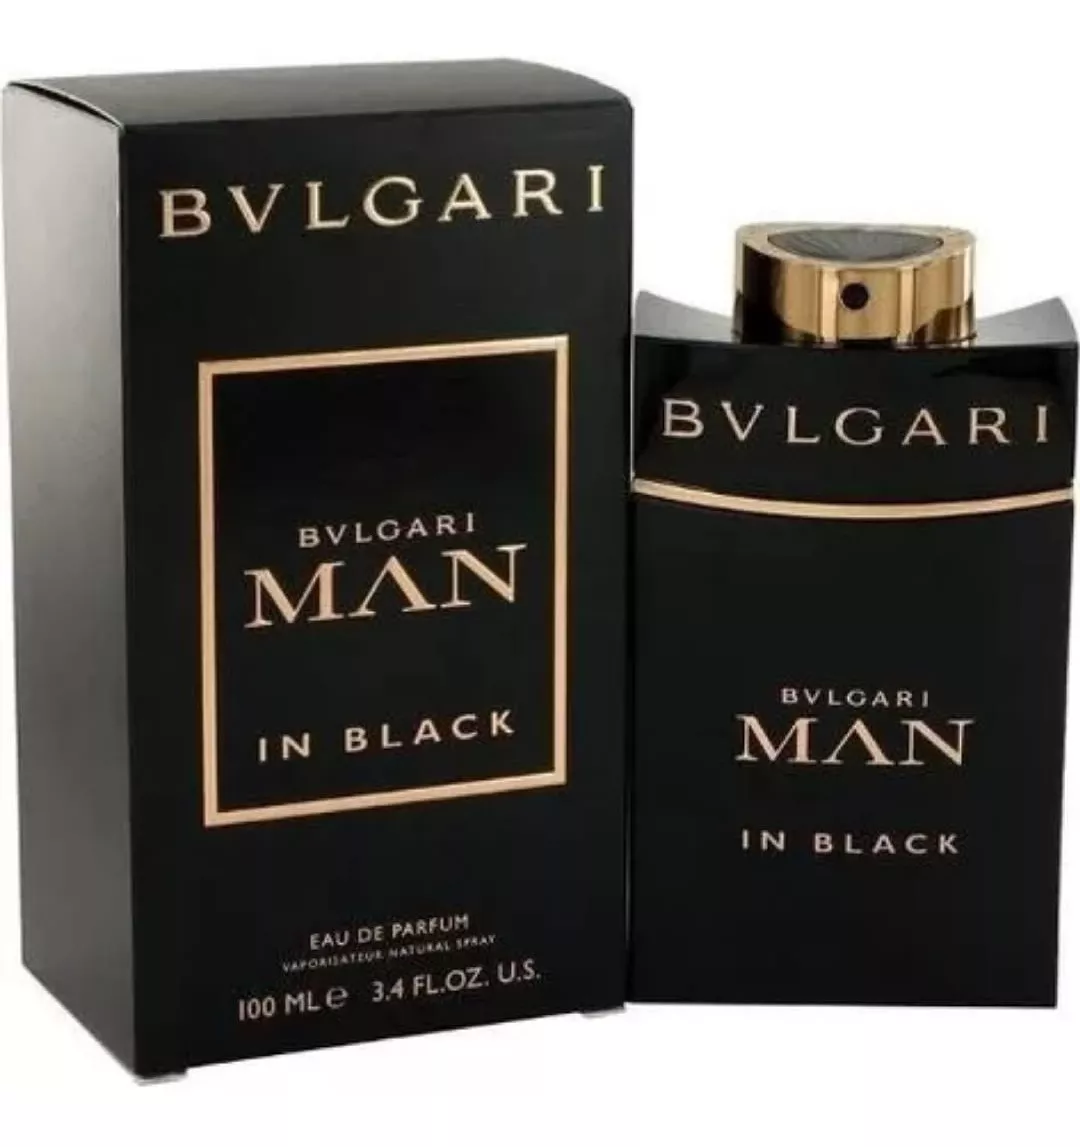 bulgari perfume hombre precio